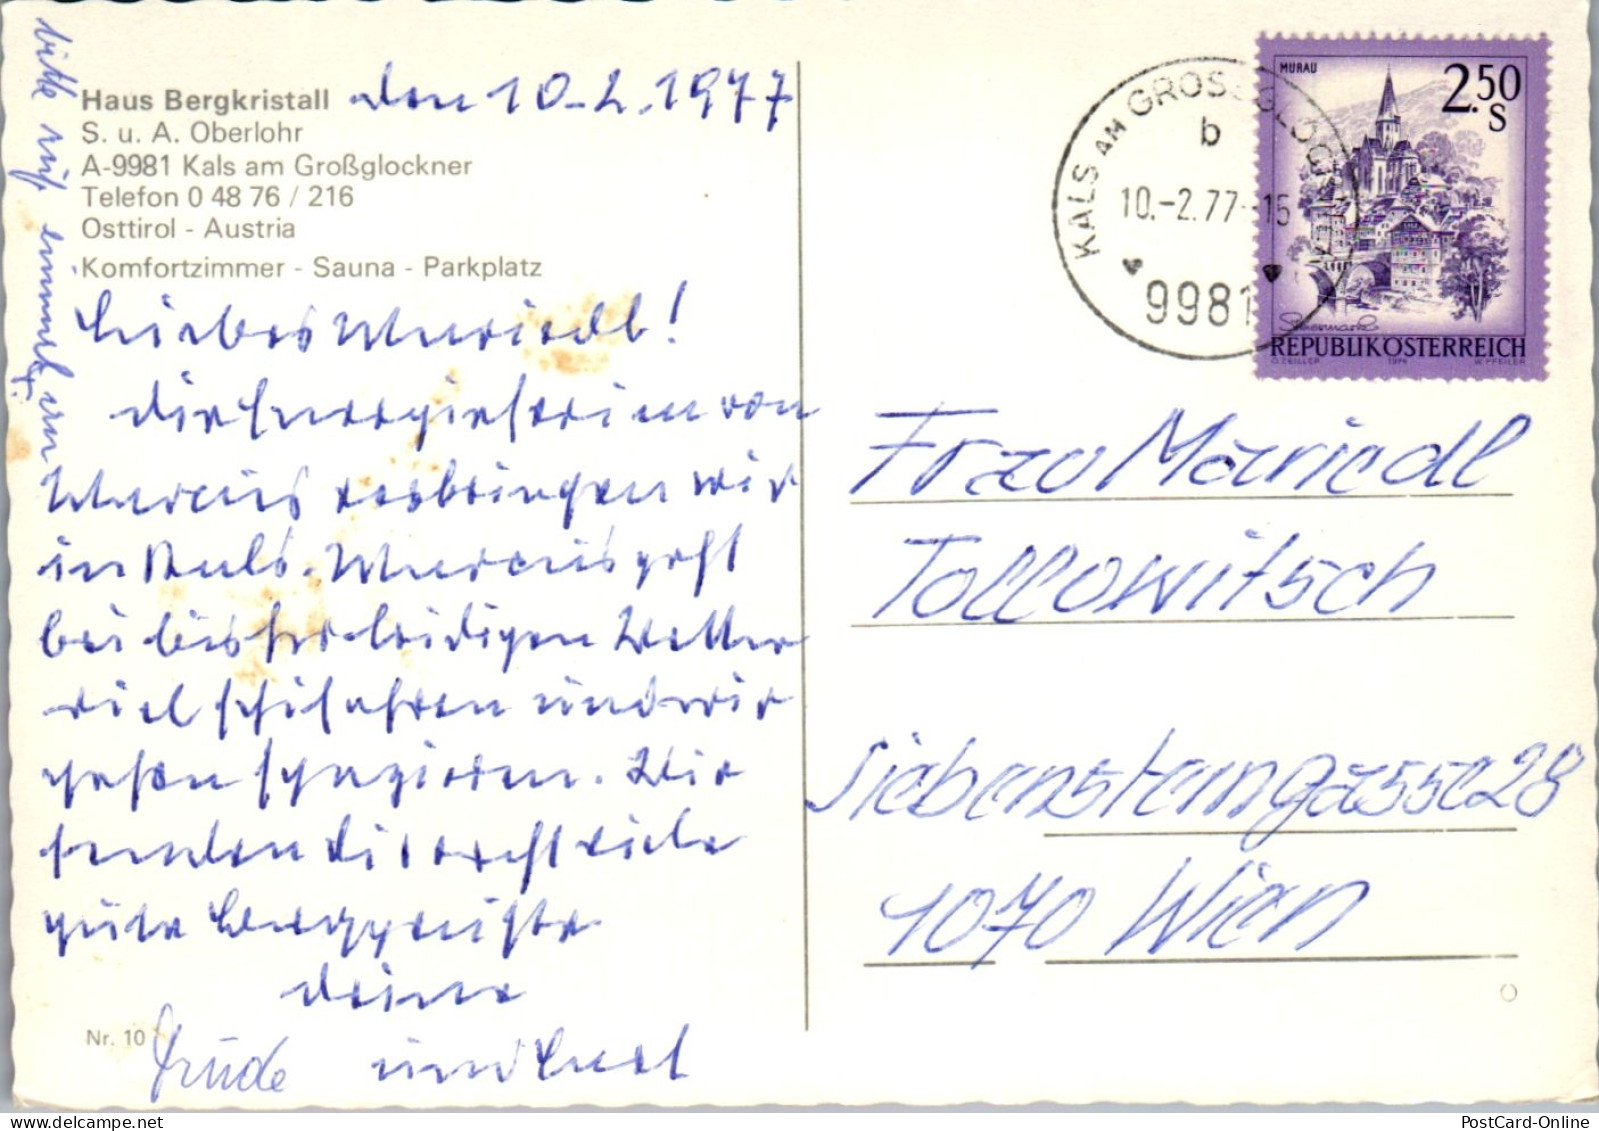 47482 - Tirol - Kals , Haus Bergkristall , S. U. A. Oberlohr - Gelaufen 1977 - Kals